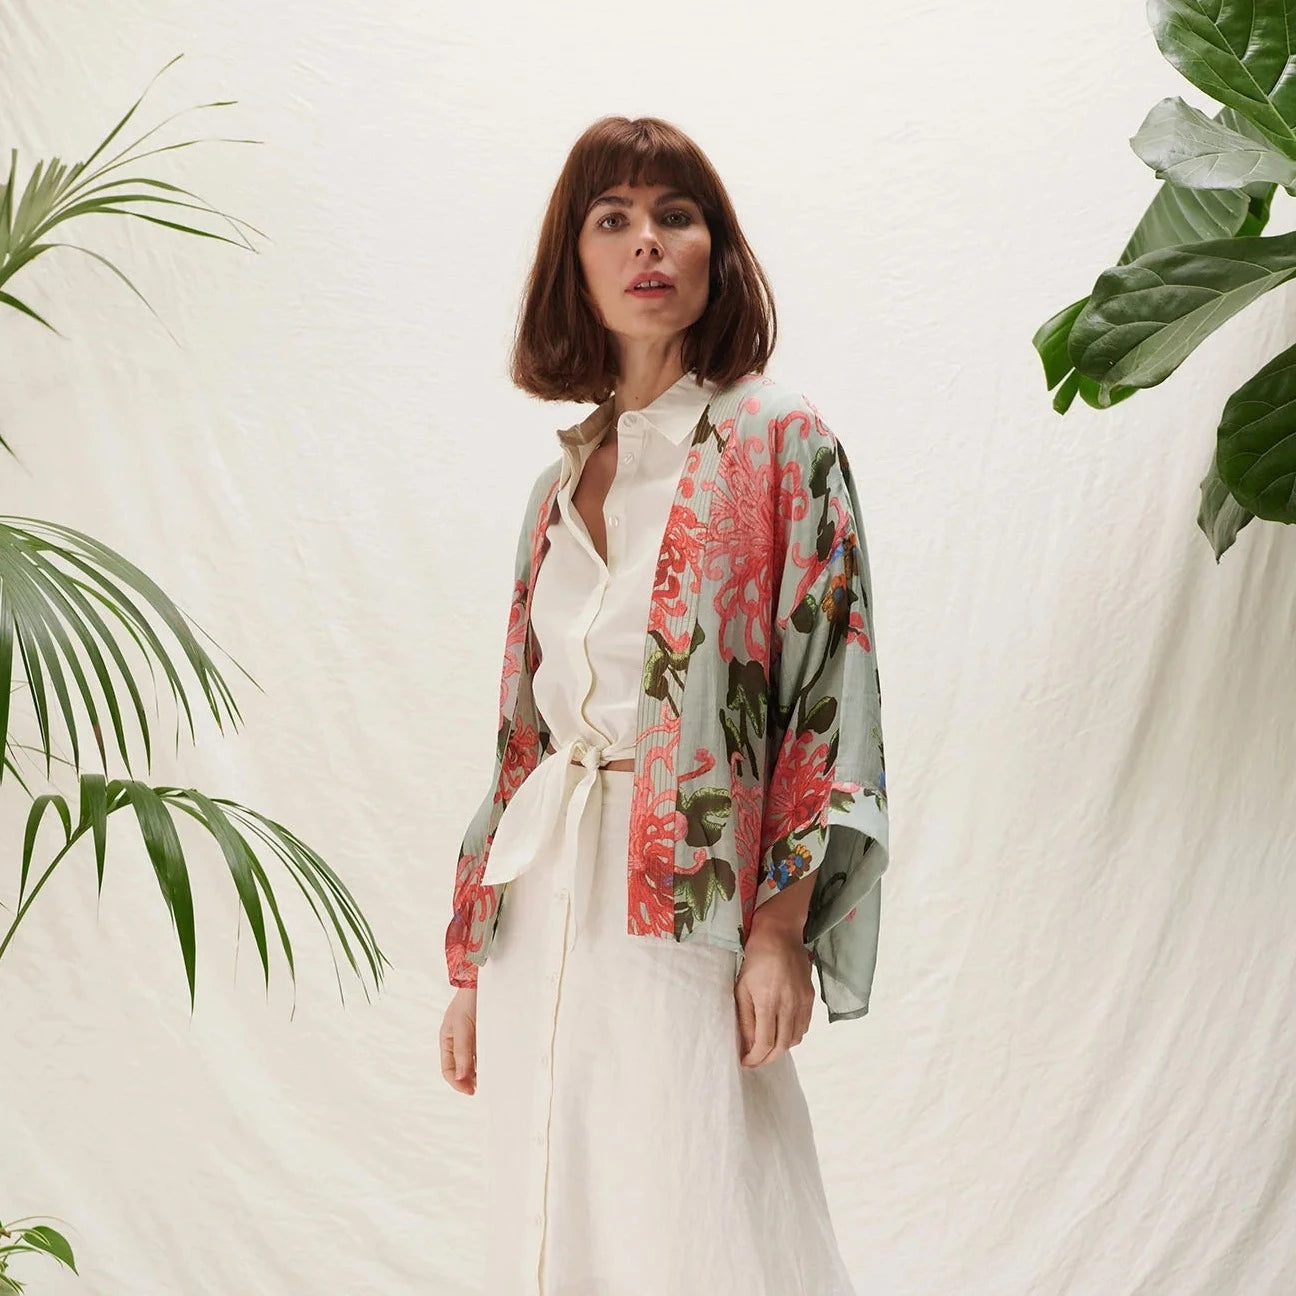 Aqua Chrysanthemum Kimono - The Nancy Smillie Shop - Art, Jewellery & Designer Gifts Glasgow